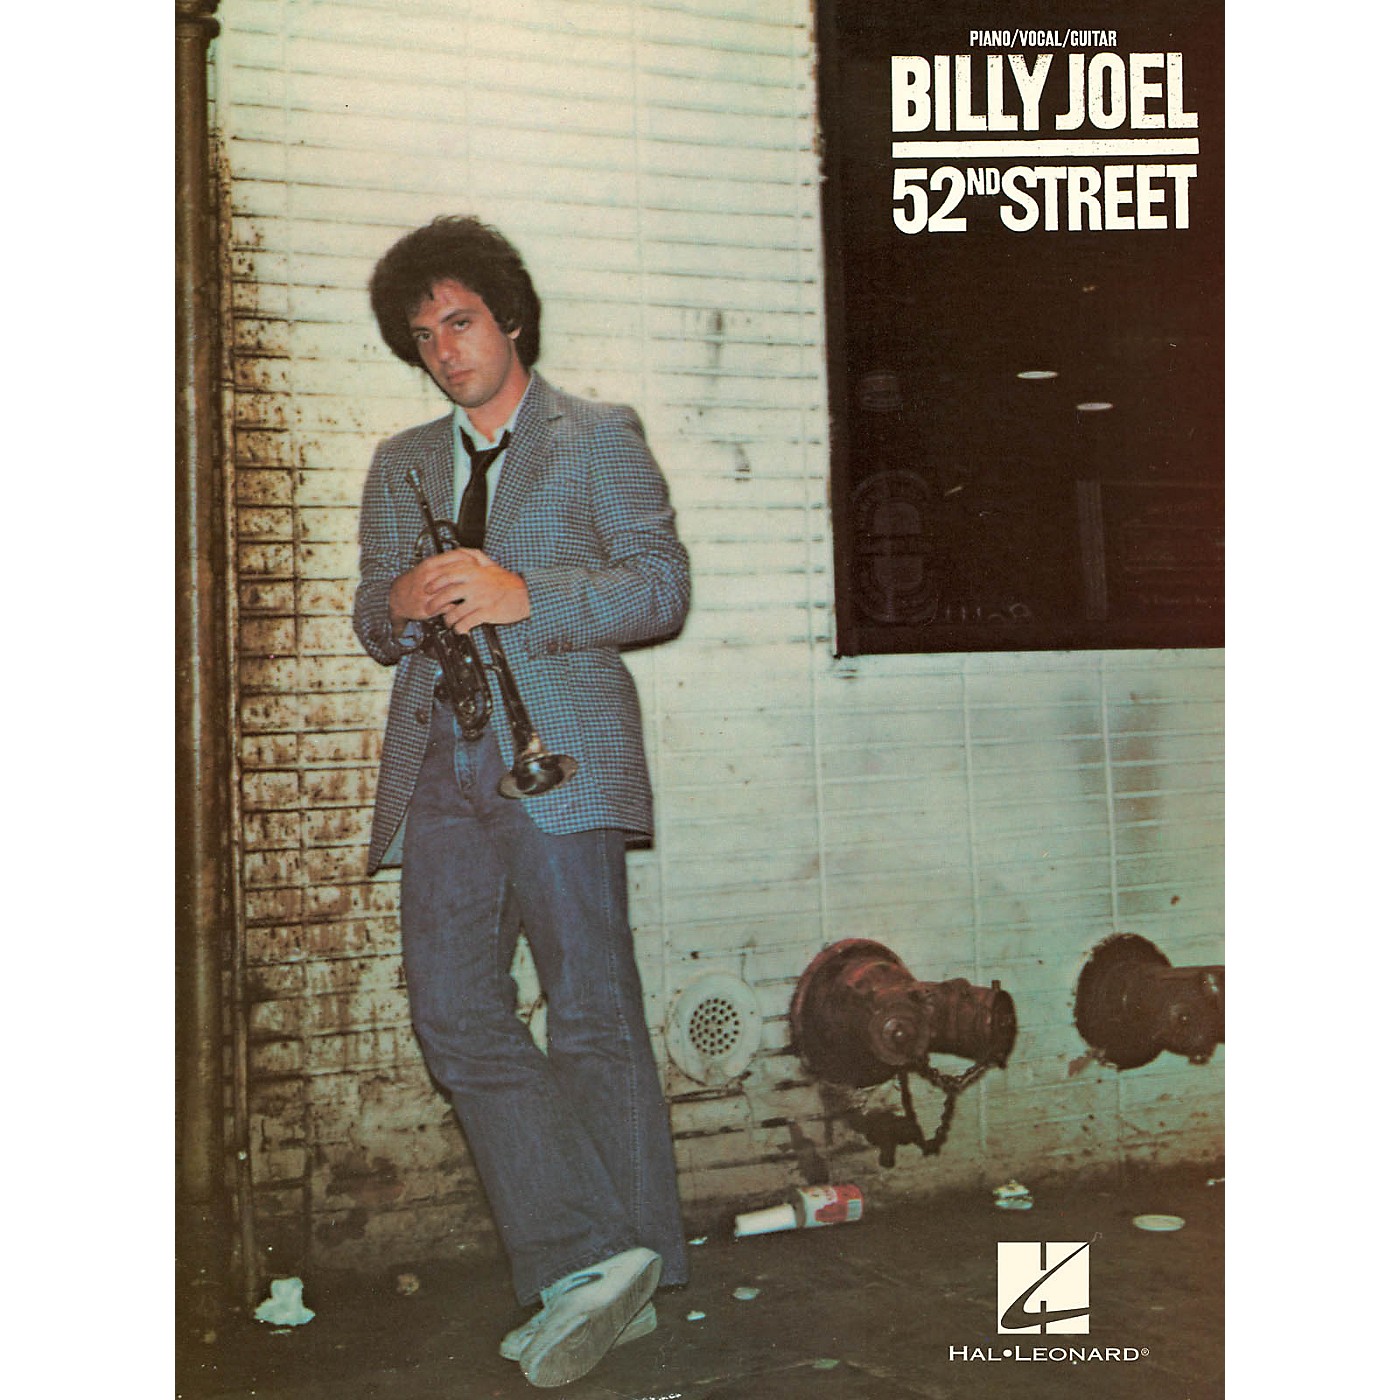 Hal Leonard Billy Joel - 52nd Street Piano/Vocal/Guitar Songbook thumbnail